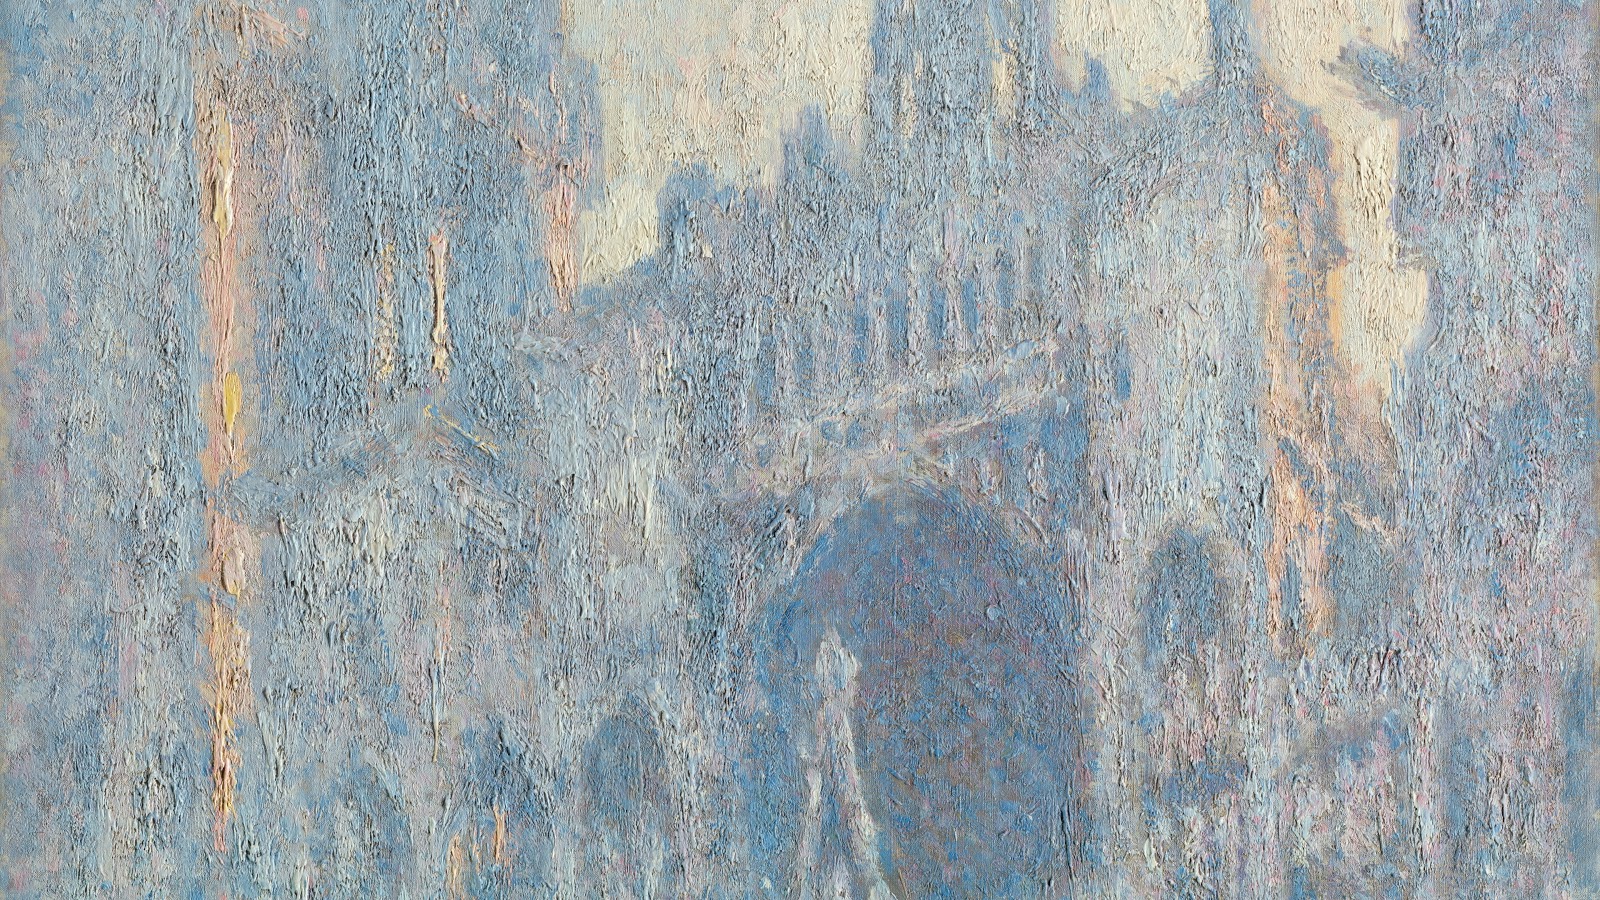 Claude+Monet-1840-1926 (592).jpg